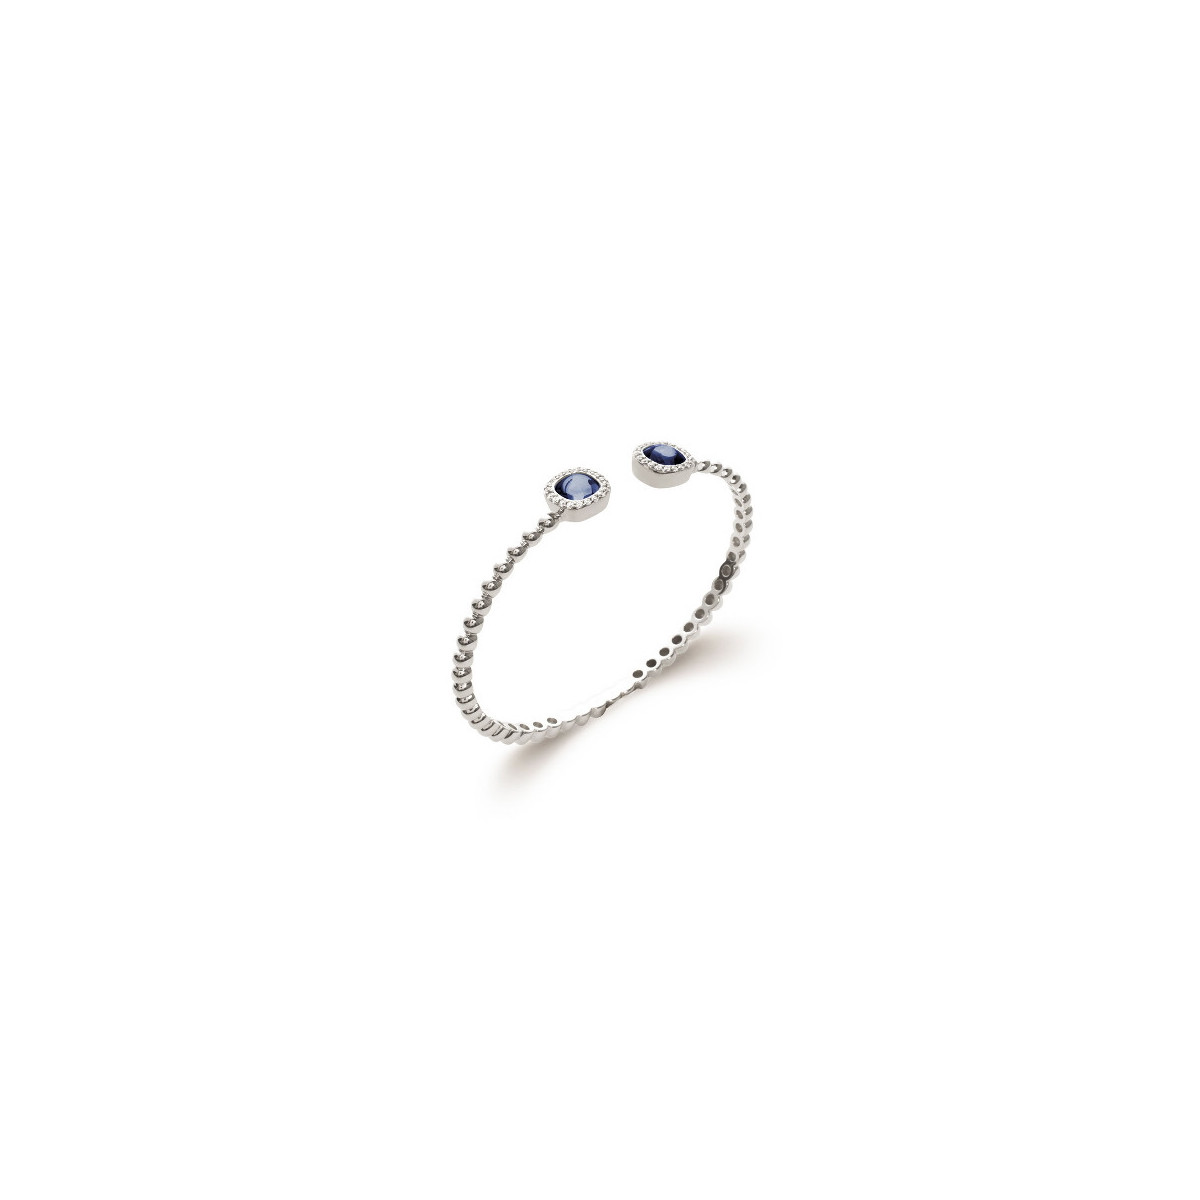 Rigid Open Bracelet With Blue Stone